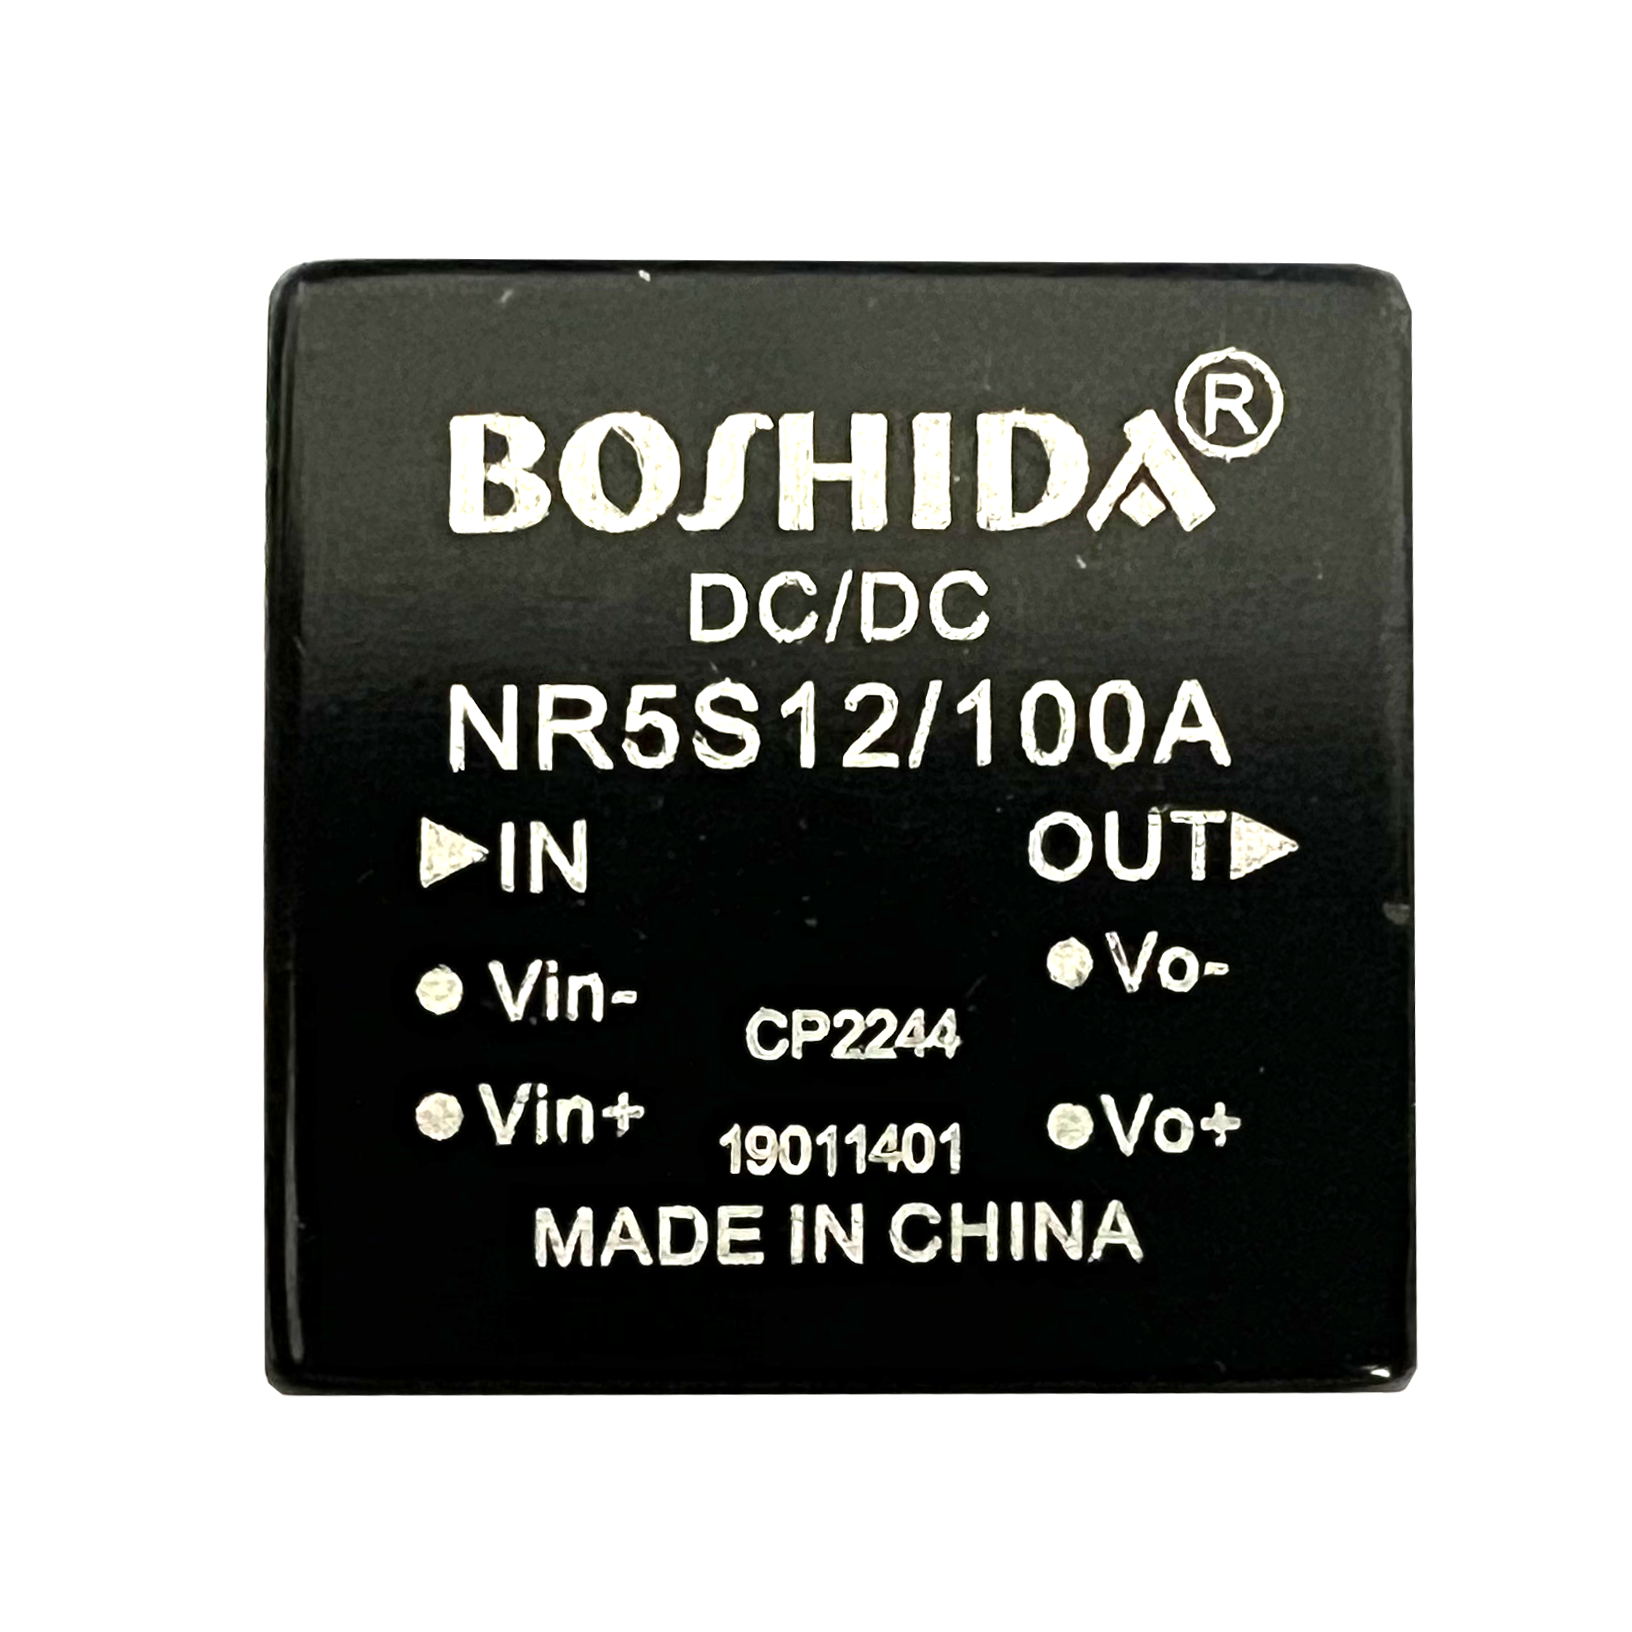 BOSHIDA DC电源模块与其他电源模块的区别与优势